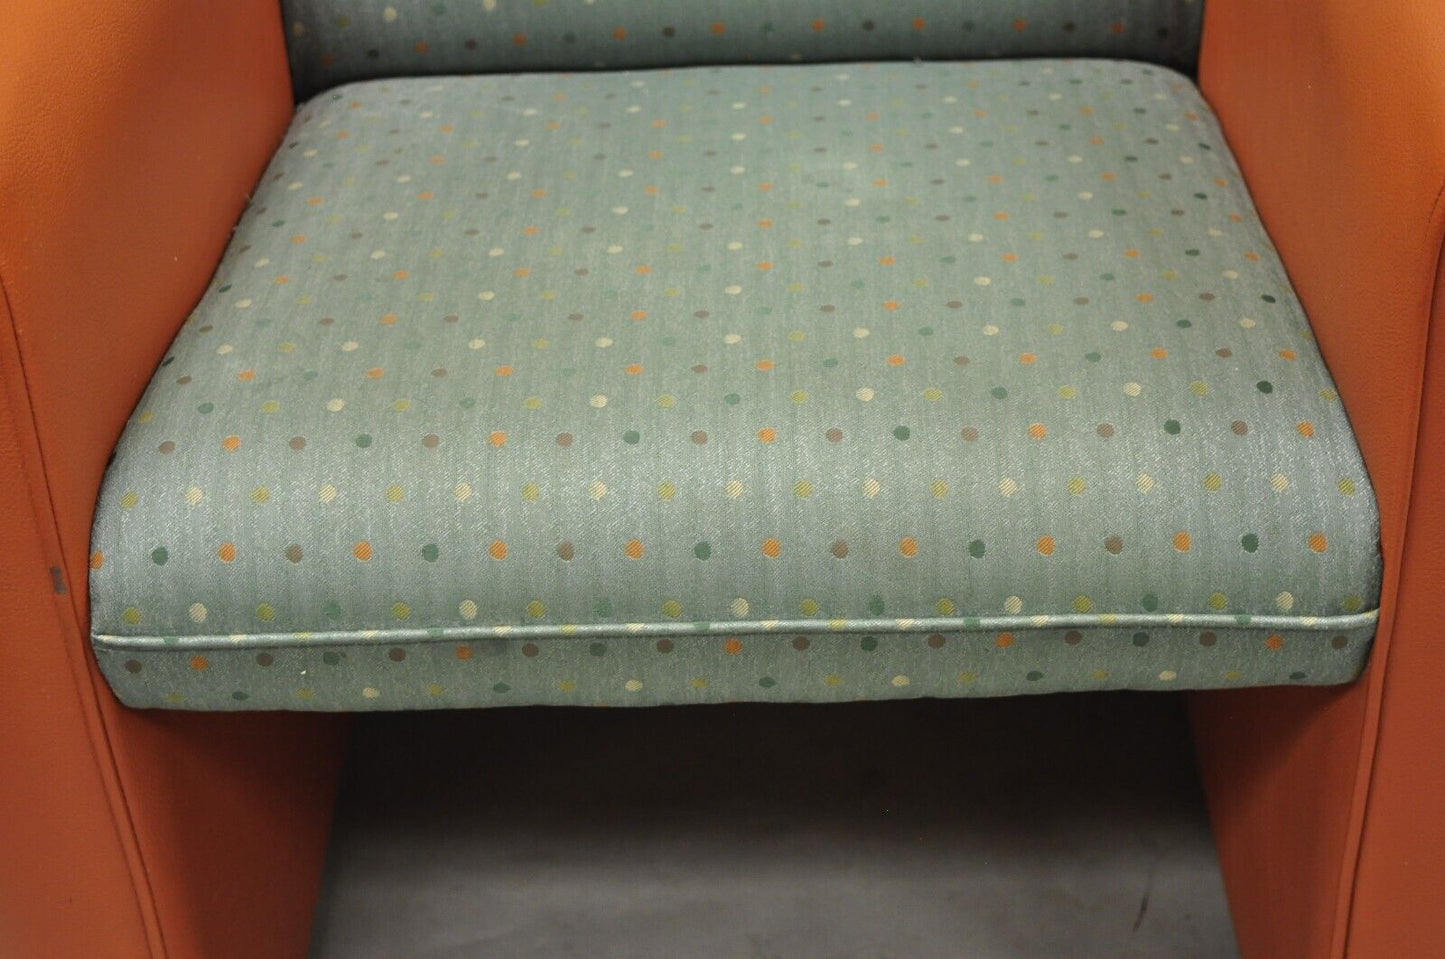 Modern Orange Upholstered Green Polka Dot Club Lounge Chairs - a Pair